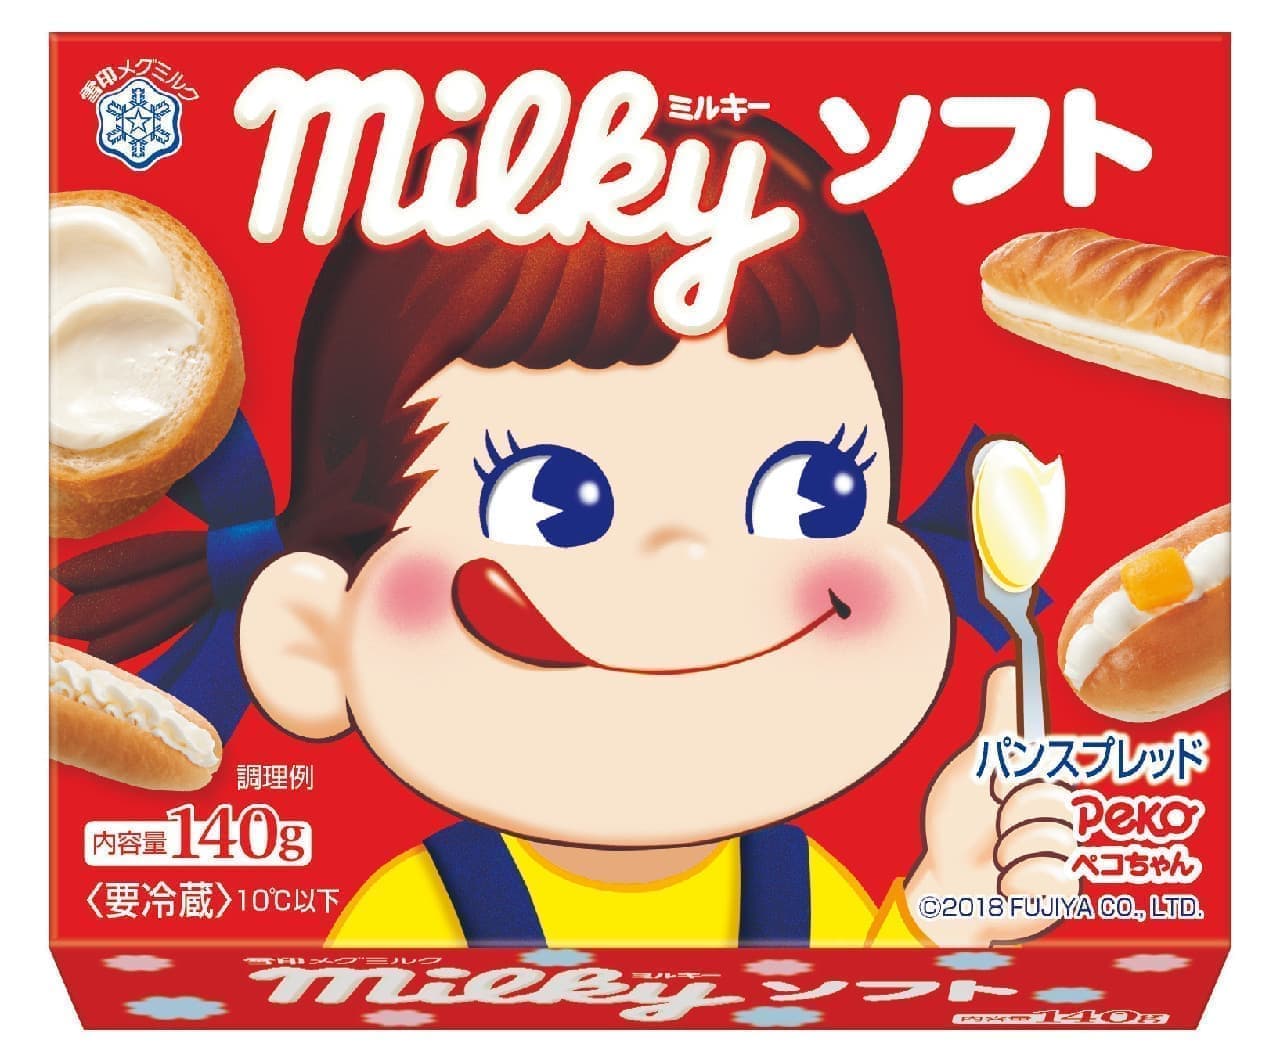 Bread spread "Milky Soft"